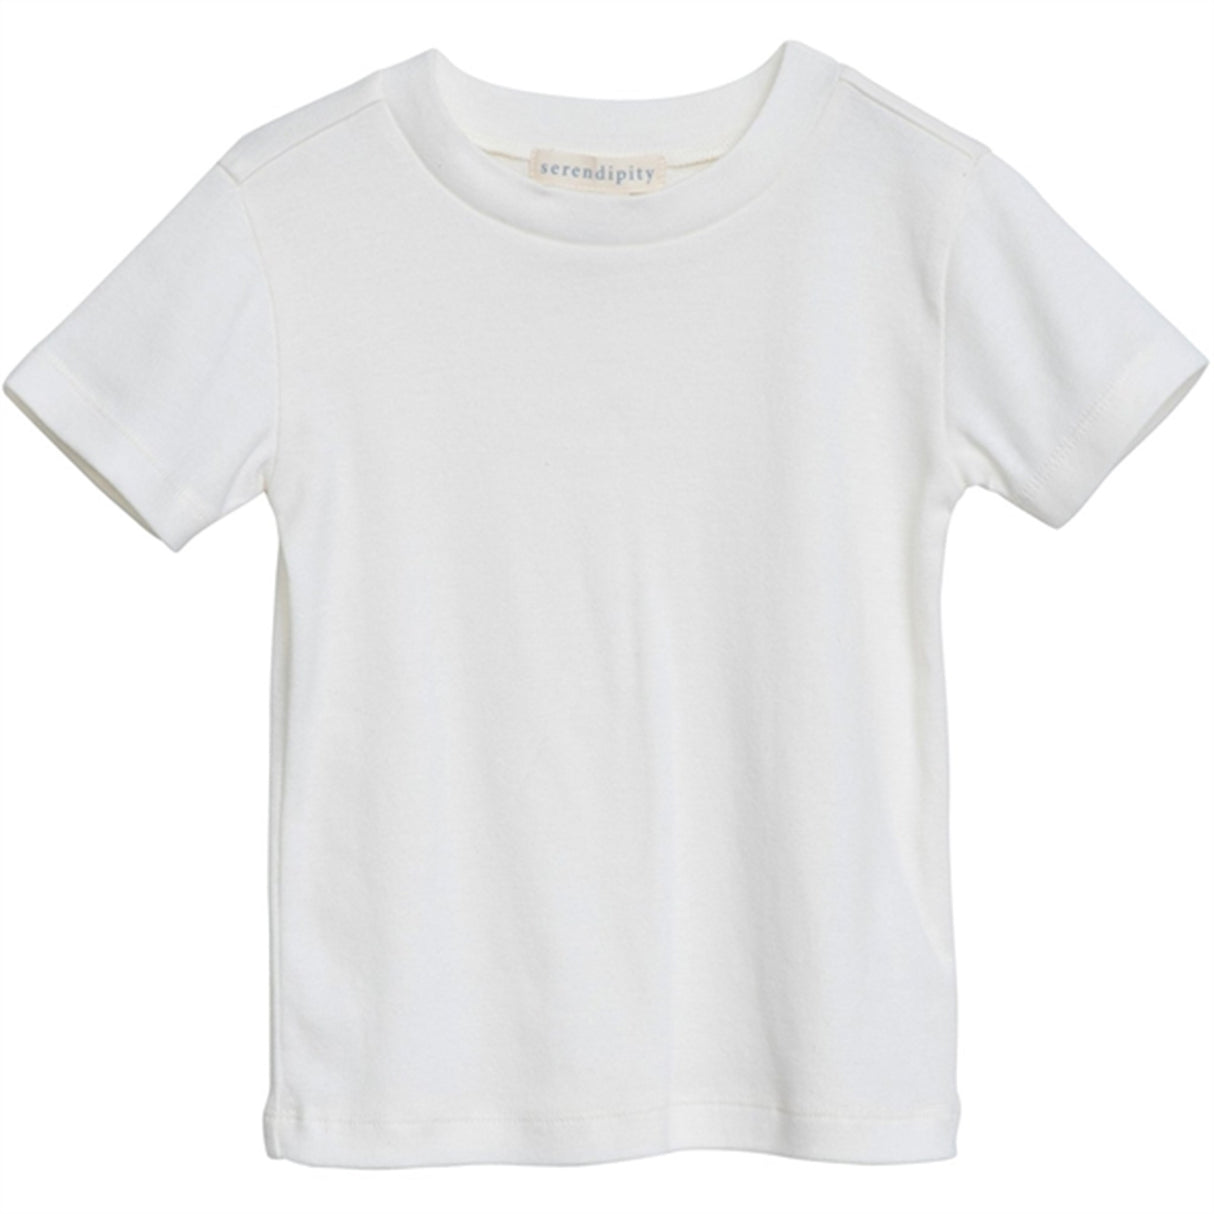 Serendipity Offwhite Short Sleeve T-shirt